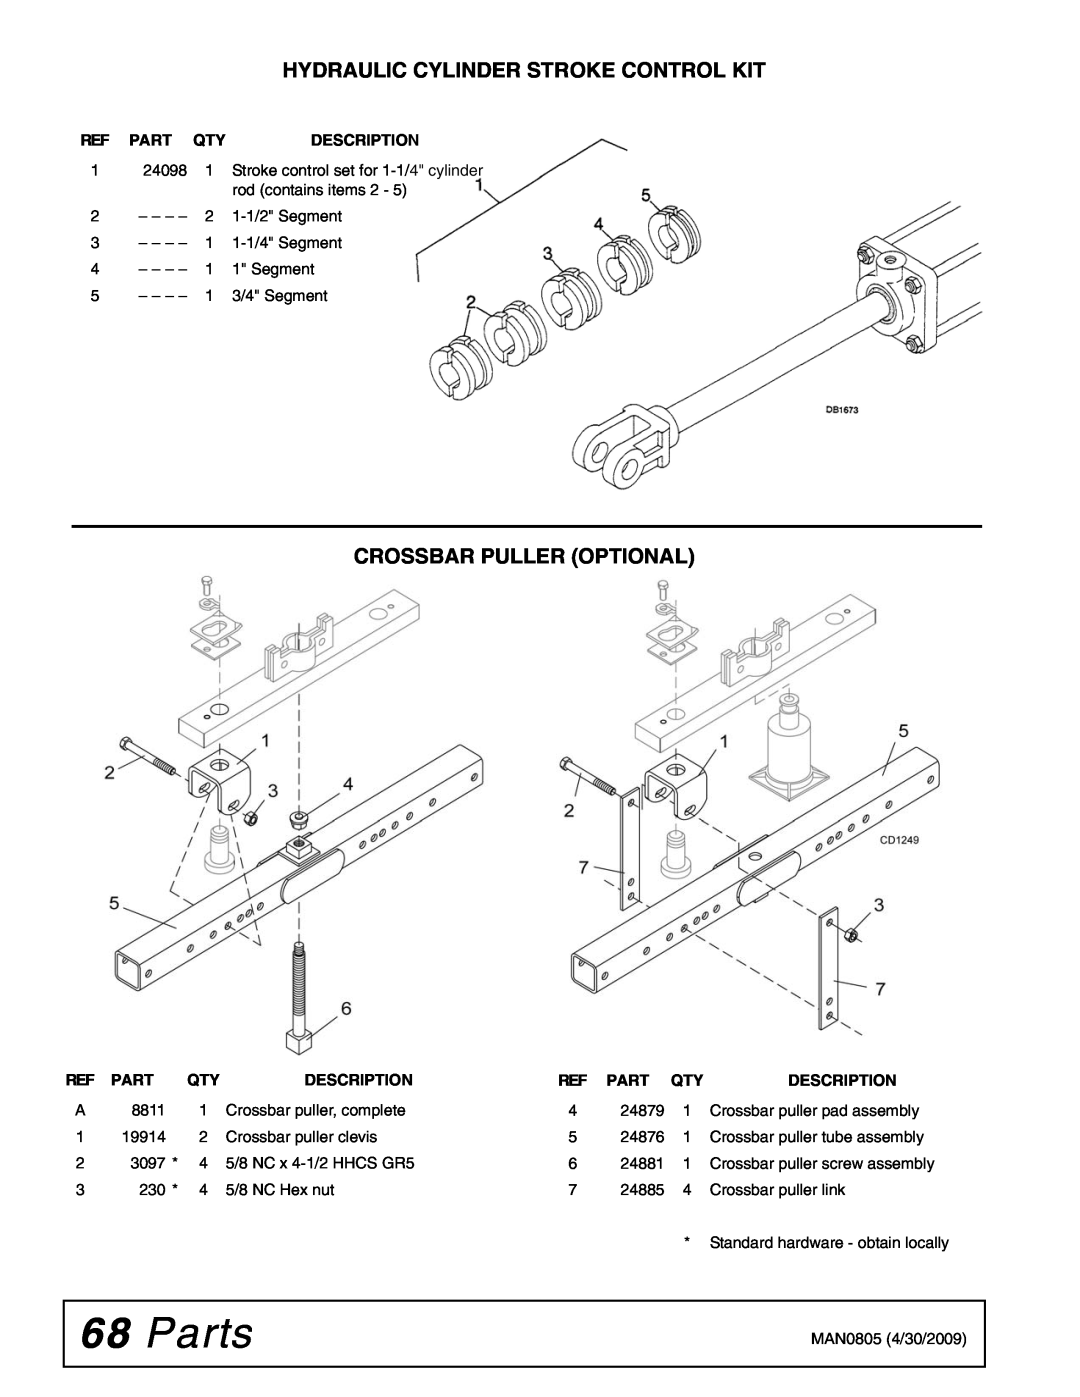 Woods Equipment BW126HBQ, BW180HBQ Parts, Crossbar Puller Optional, Hydraulic Cylinder Stroke Control Kit, Description 